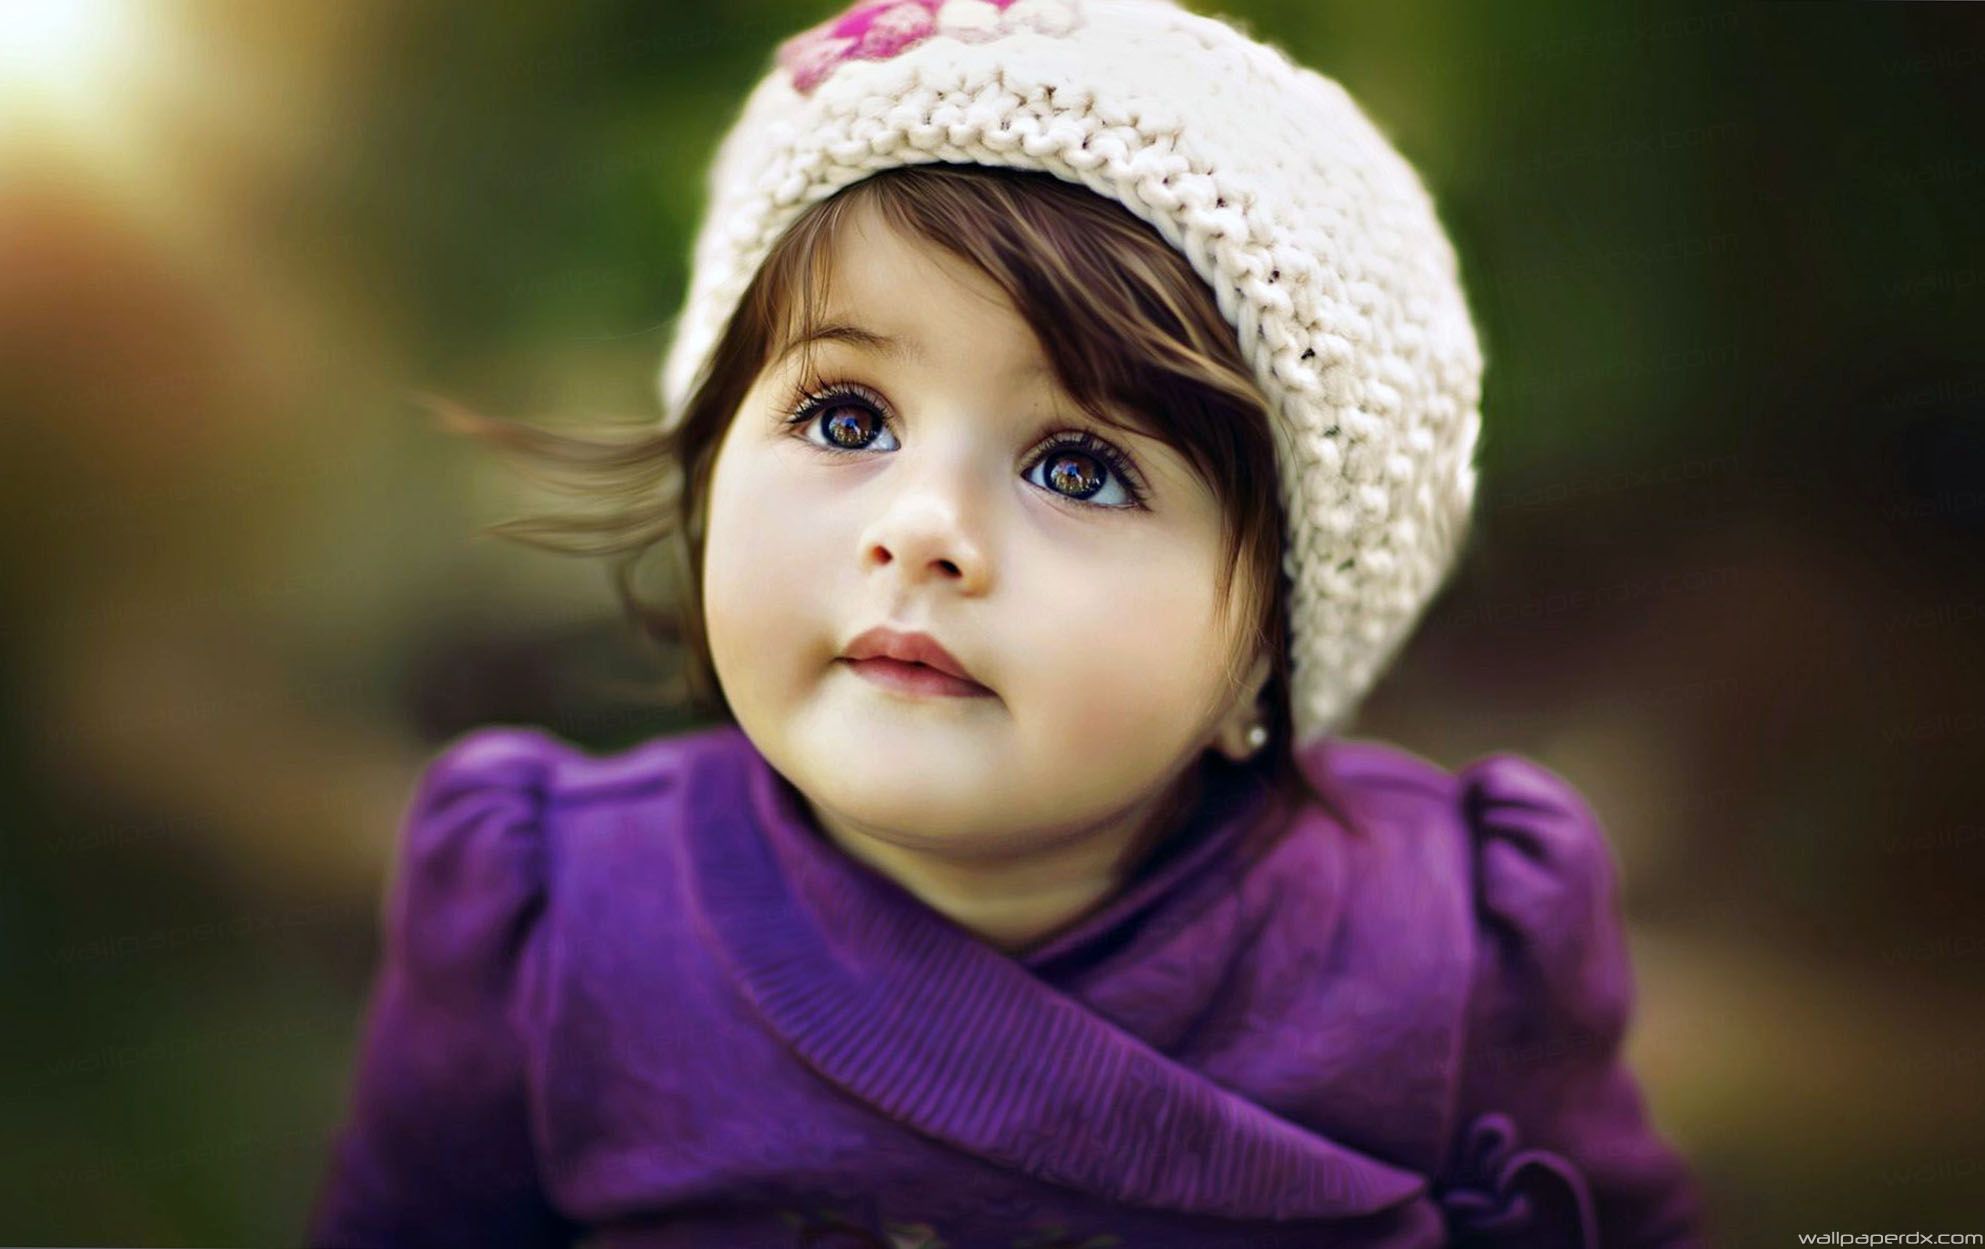 Cute Baby Girl Wallpaper Full HD Image Four